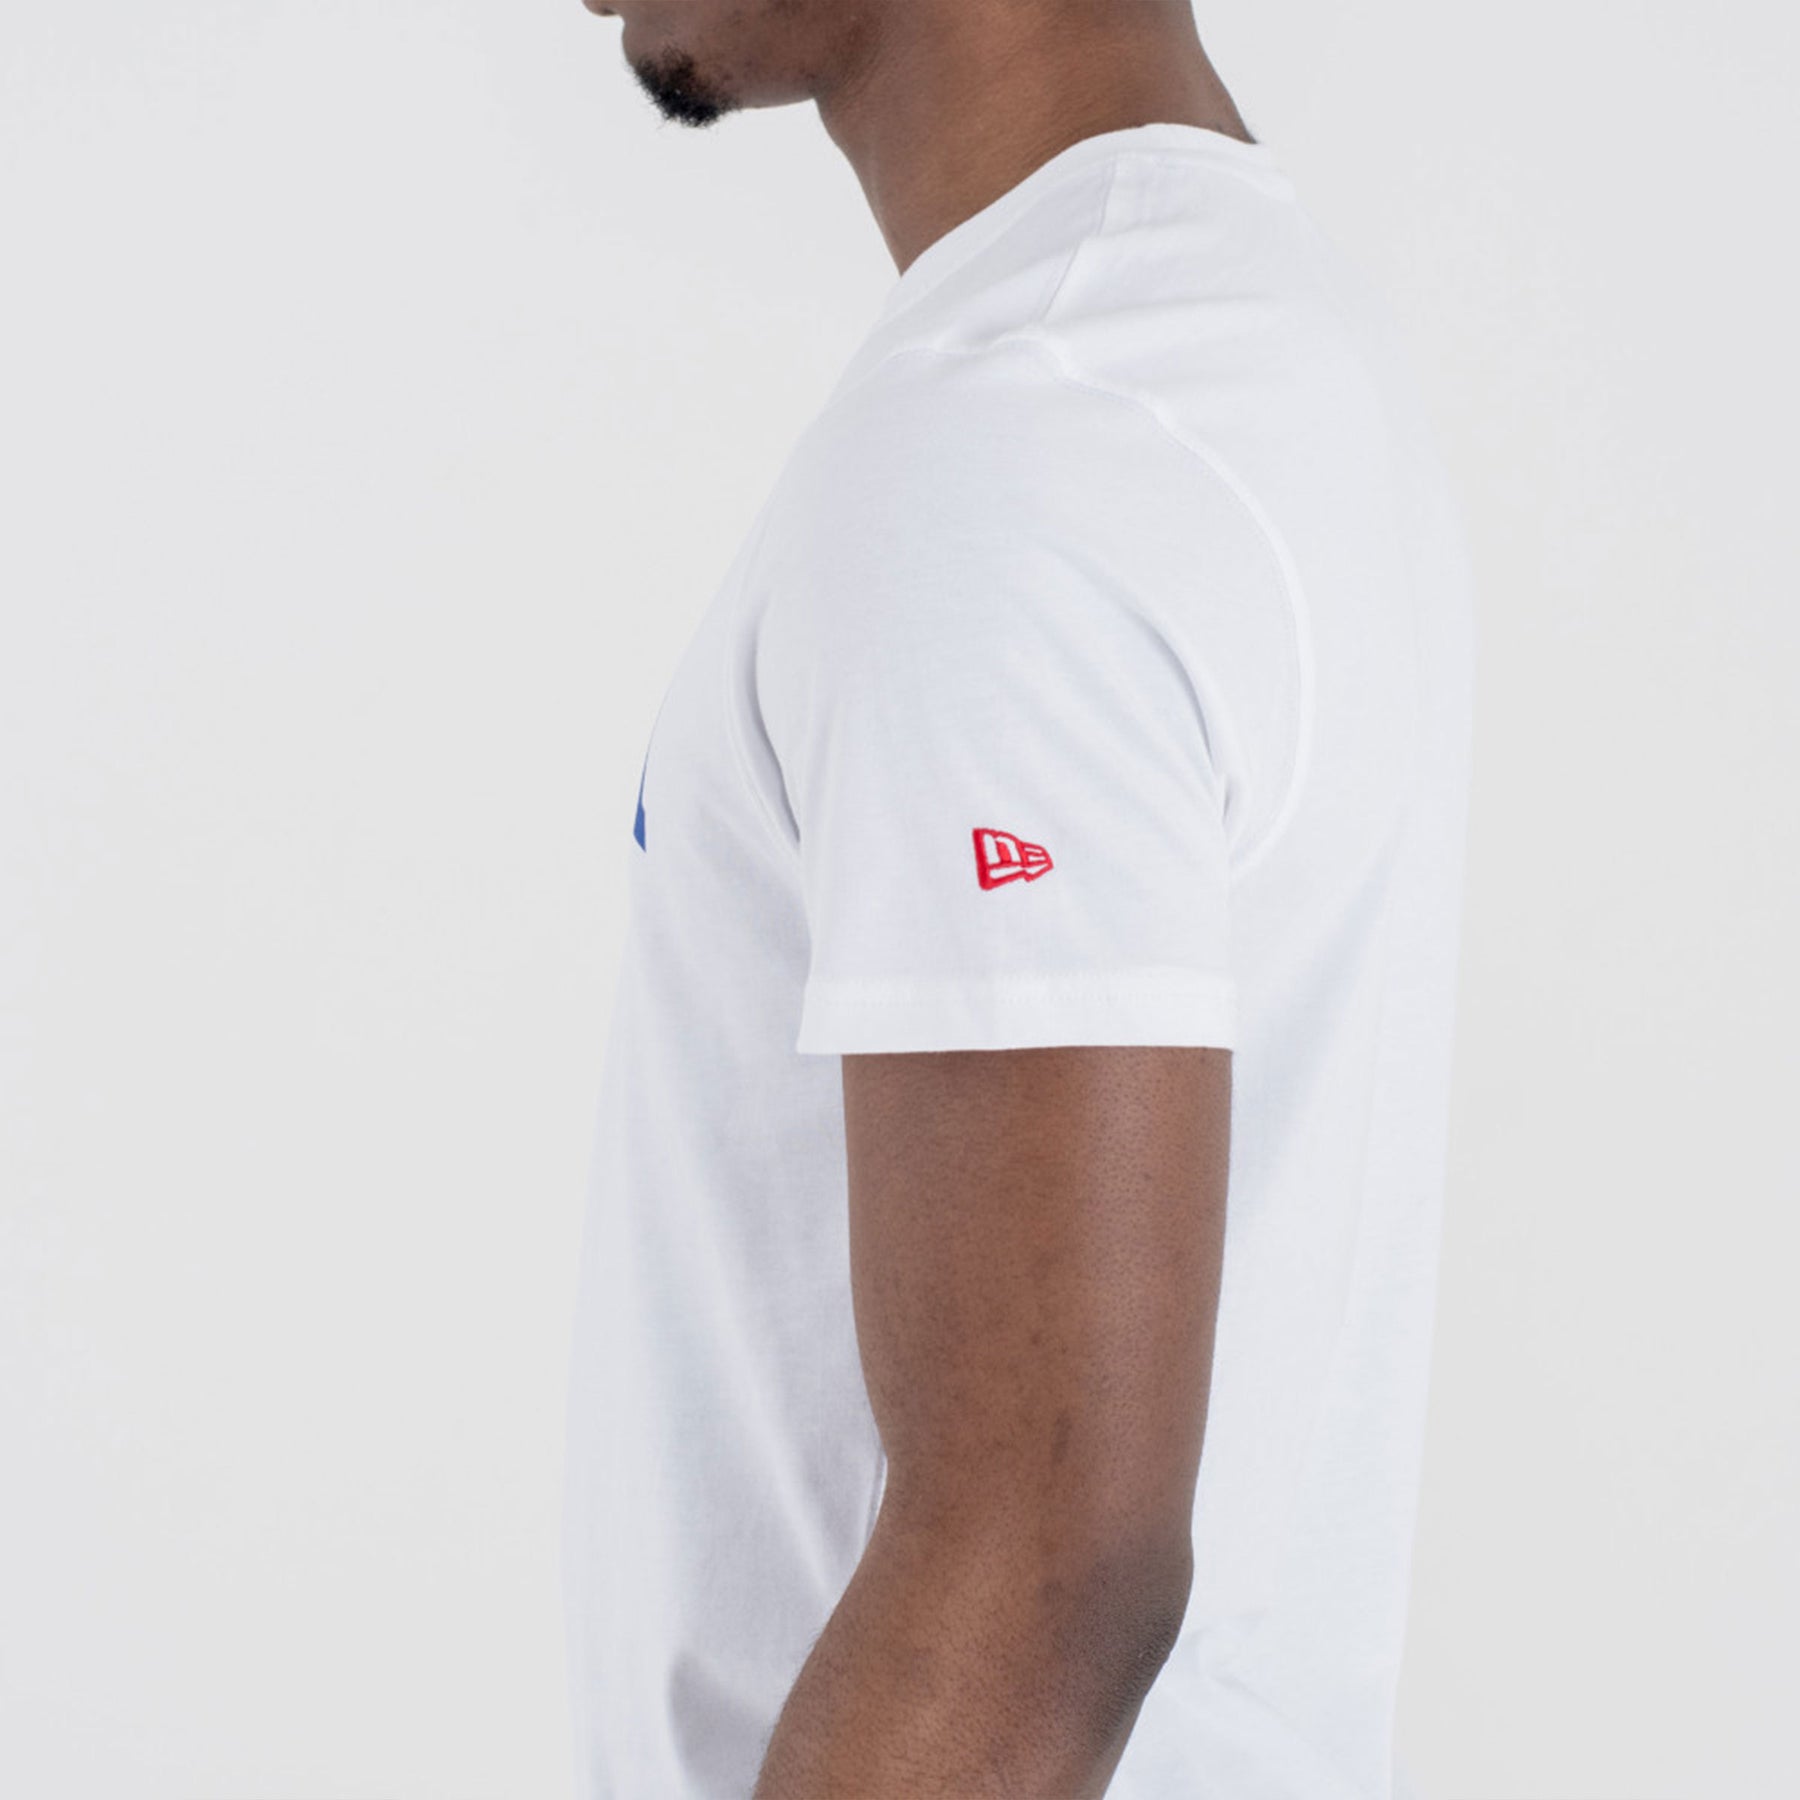 NBA Philadelphia 76ers Team Logo T-Shirt White